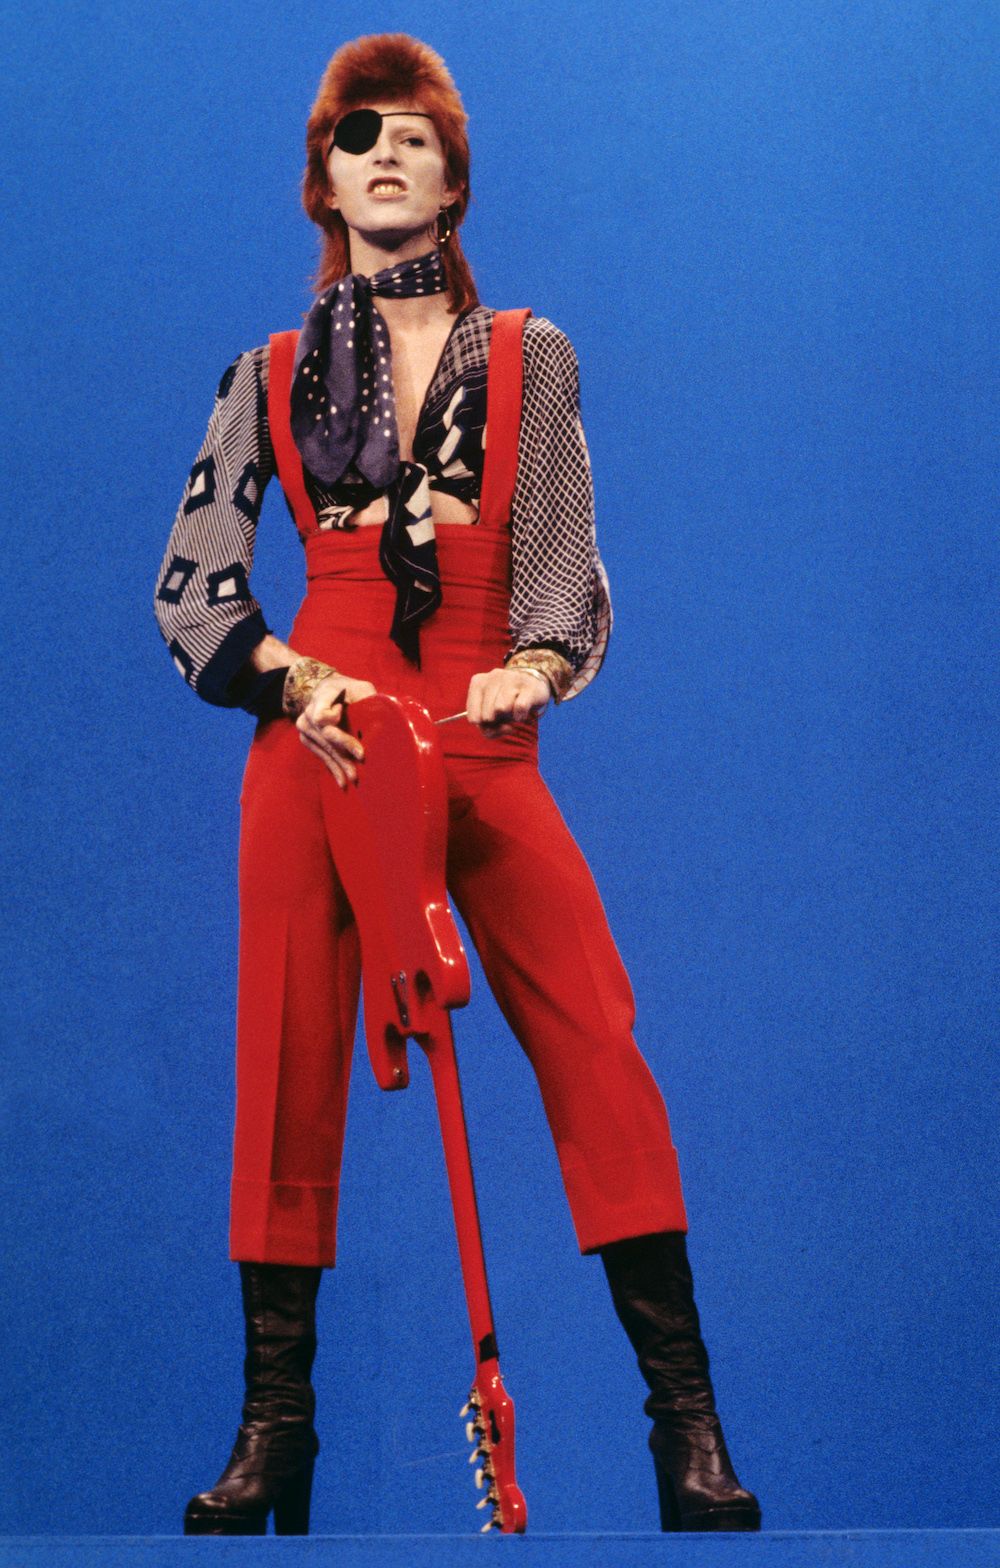 Essay: Bowie and Fashion